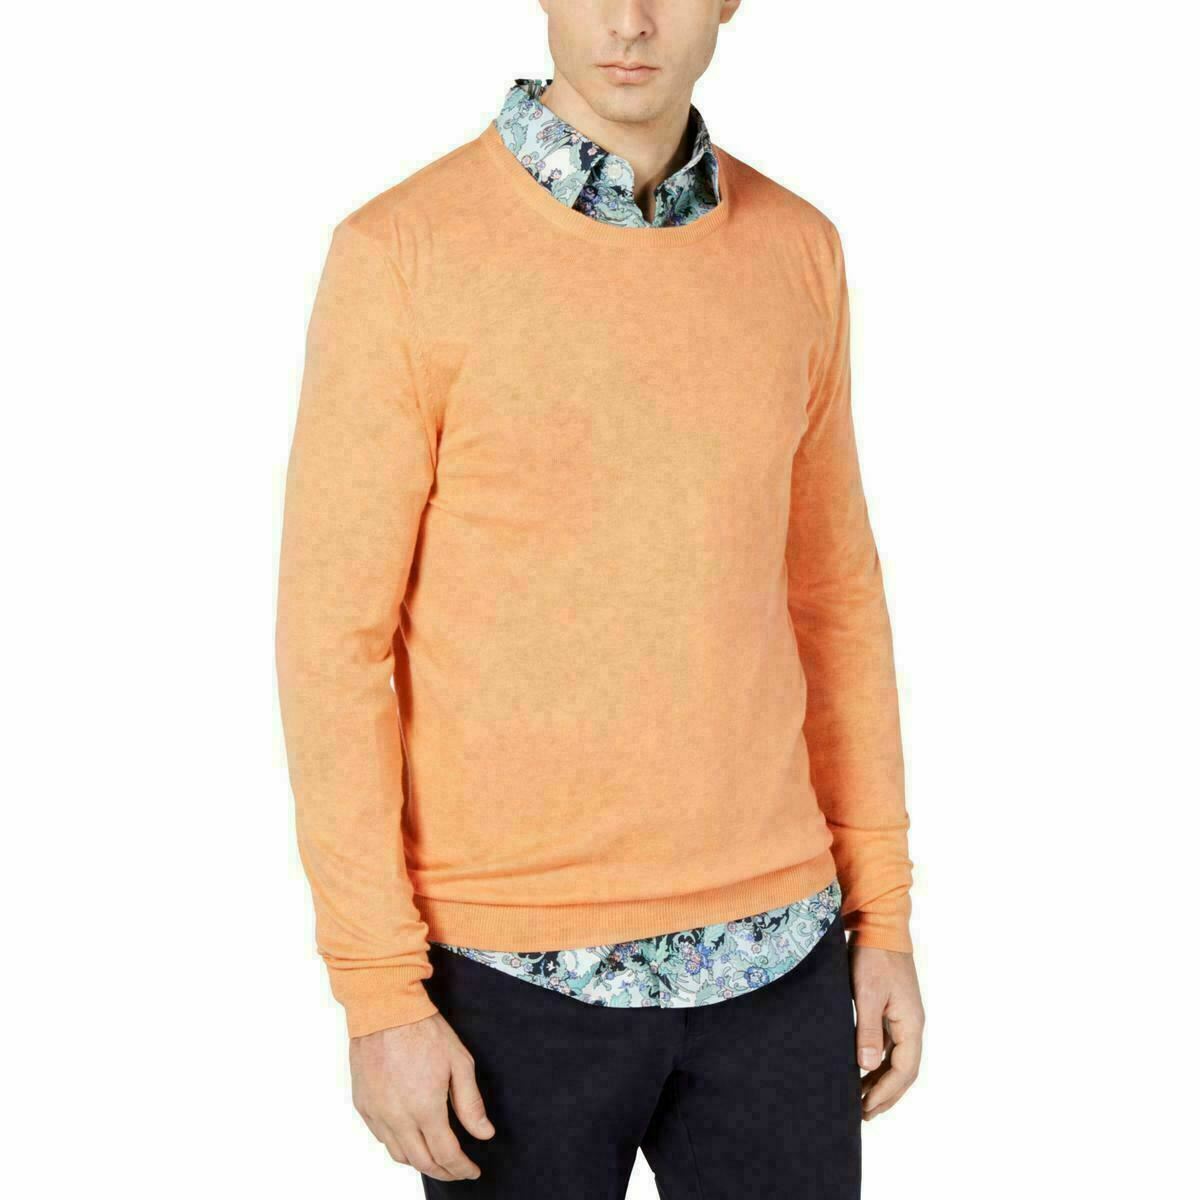 Tasso Elba Men's Cotton Blend Lightweight Crewneck Sweater Orange Size Large